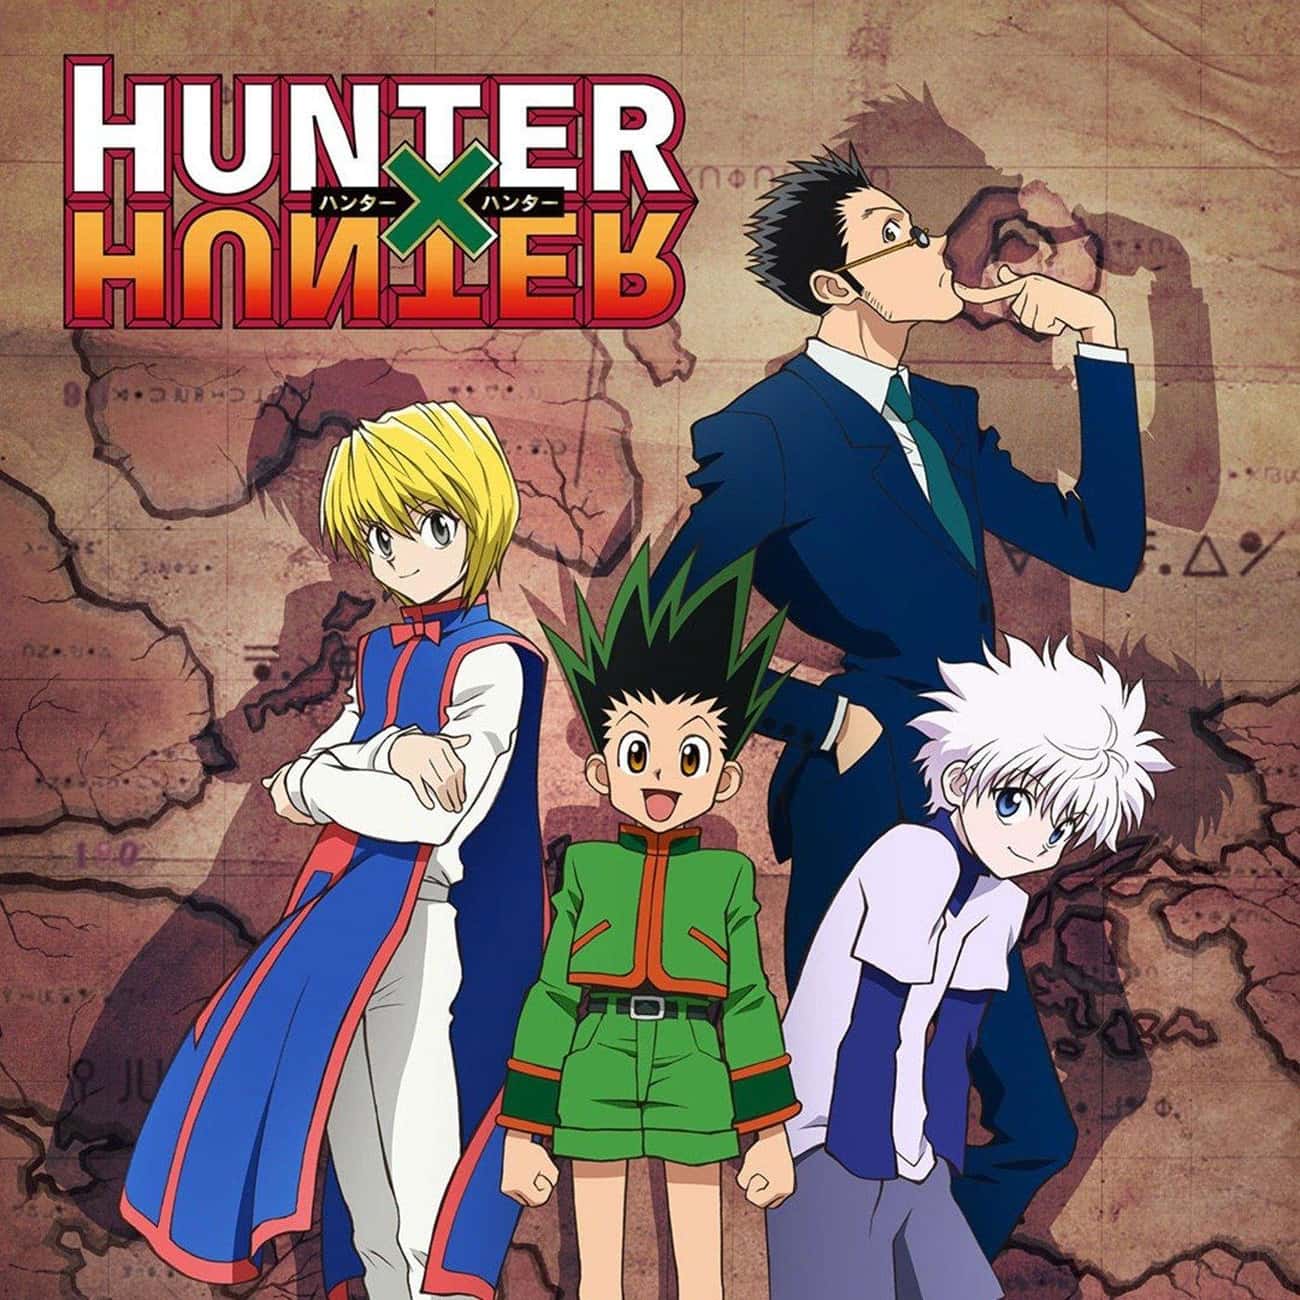 Hunter x Hunter (2011)